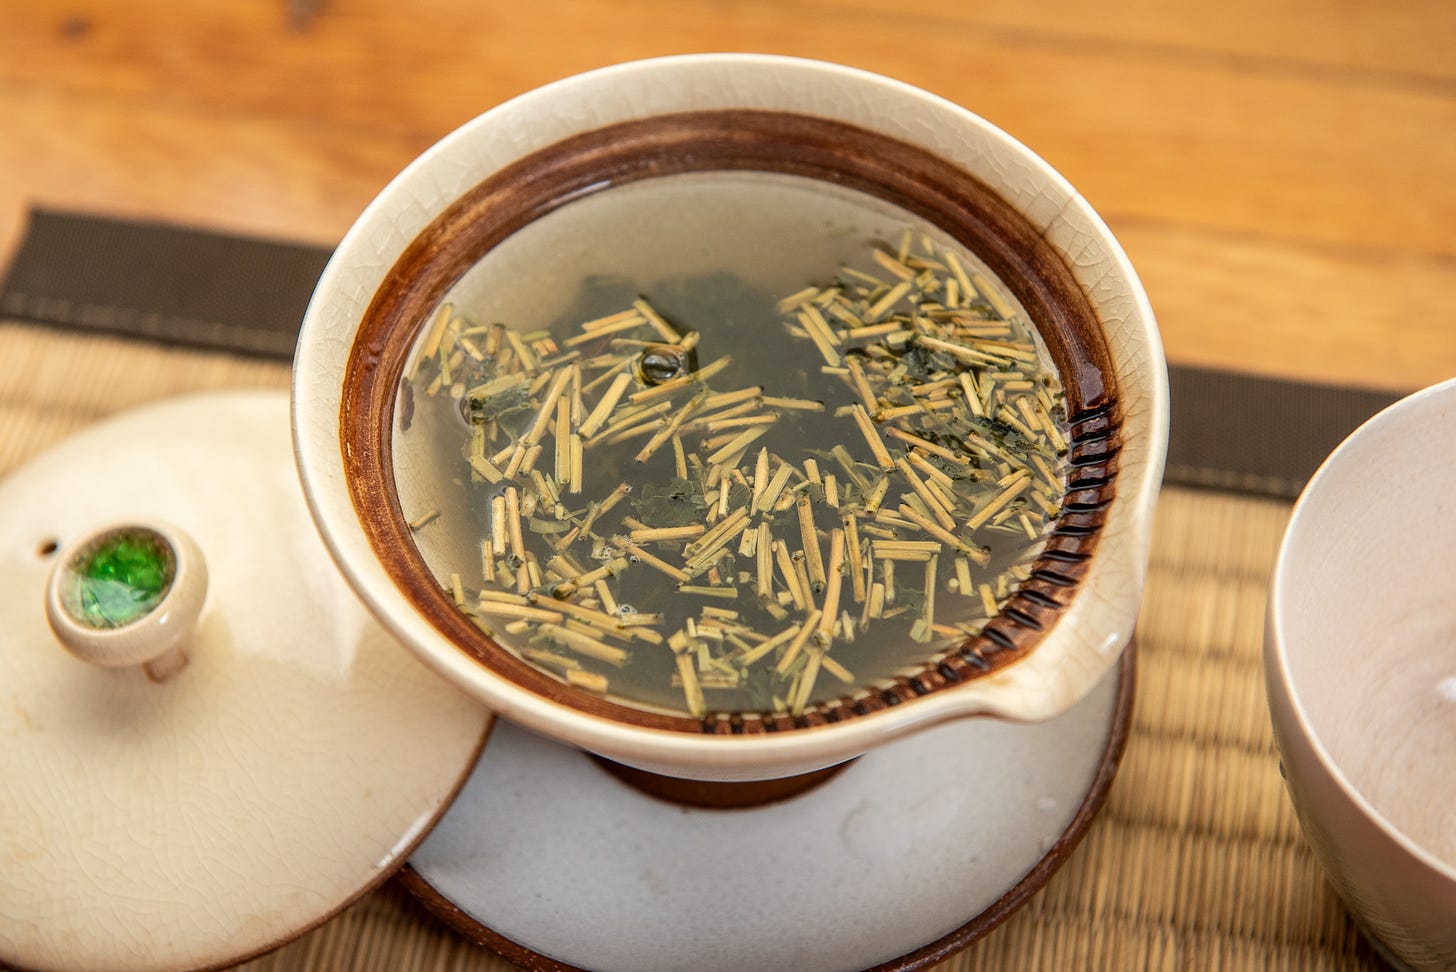 ID: Brewing karigane green tea in a shiboridashi